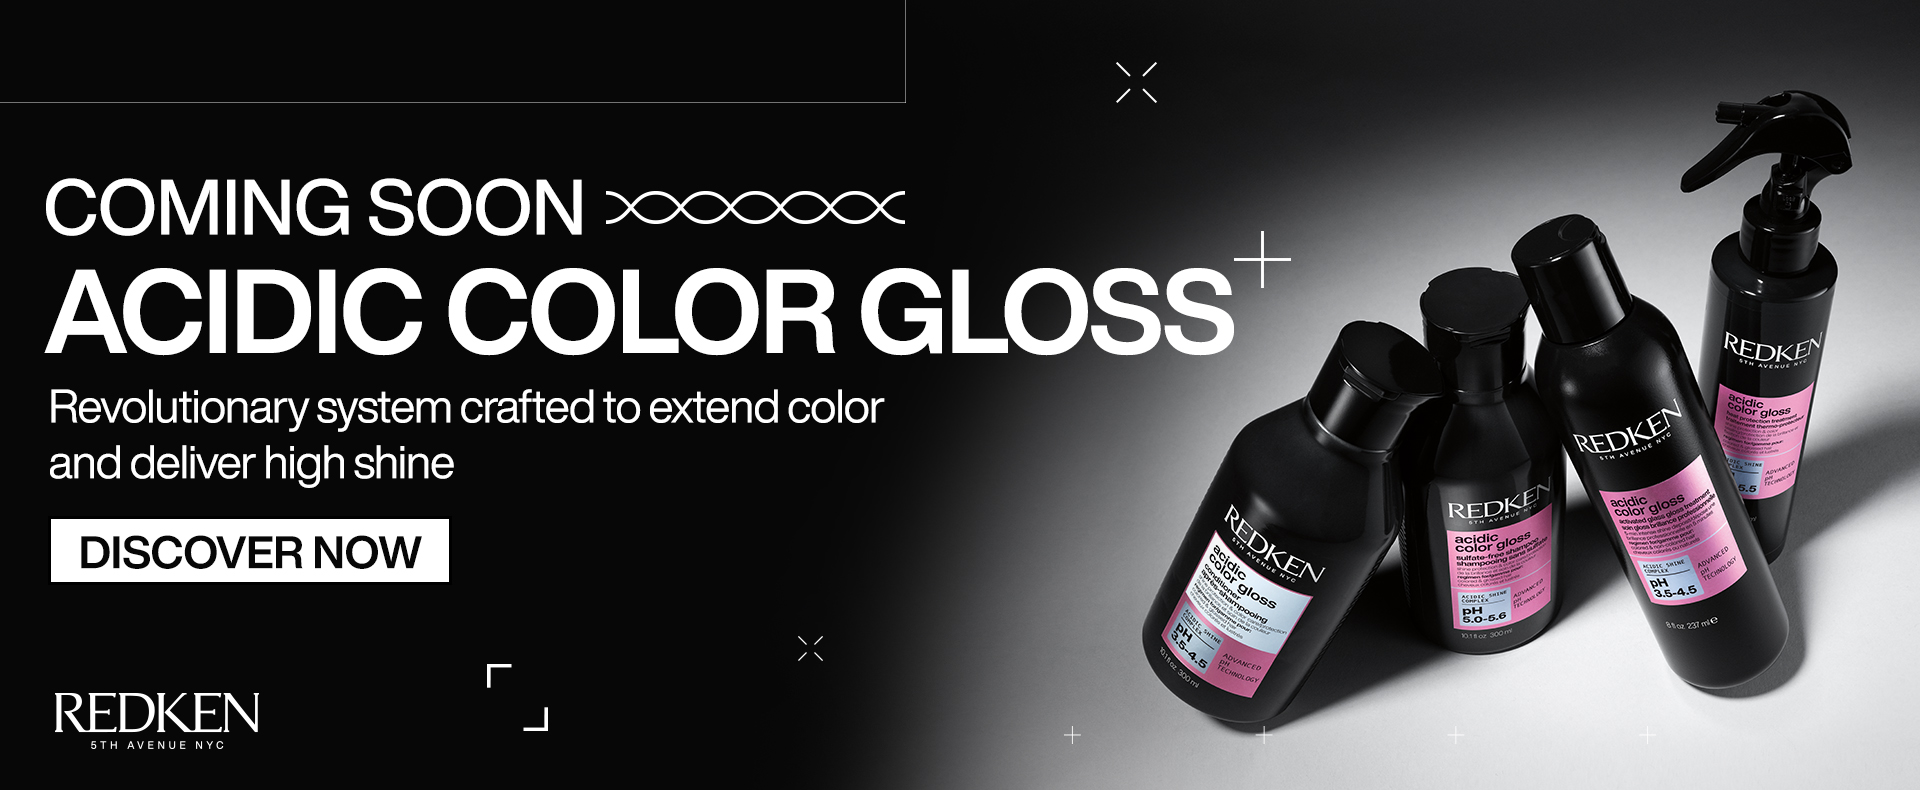 COMING SOON! Acidic Color Gloss!